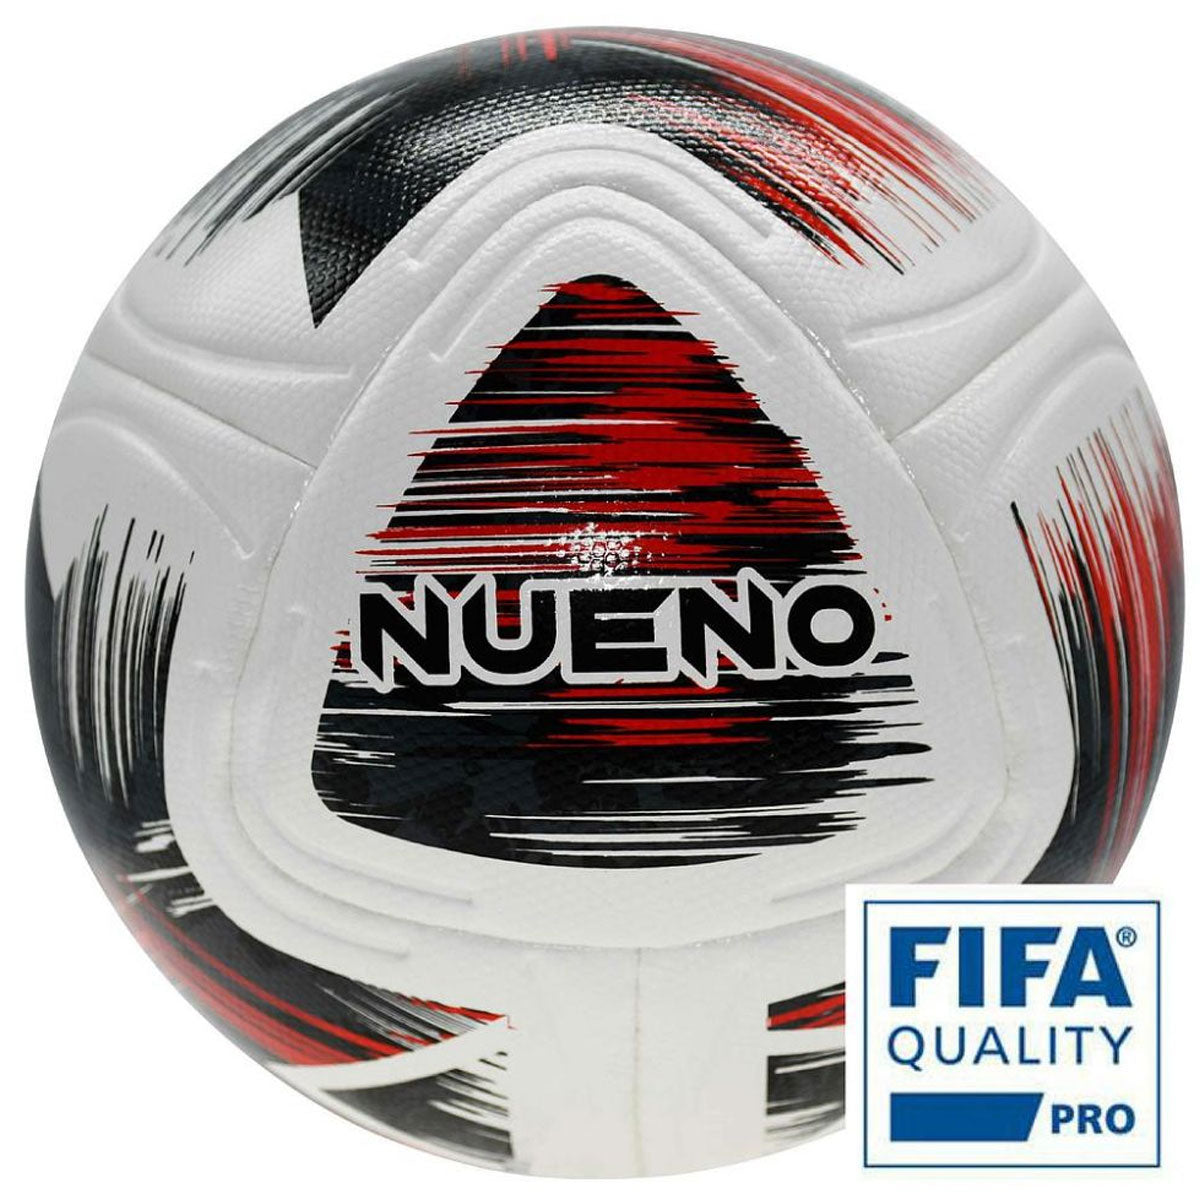 Precision Training Nueno Fifa Quality Pro Match Football - Size 5 - White/Black/Red